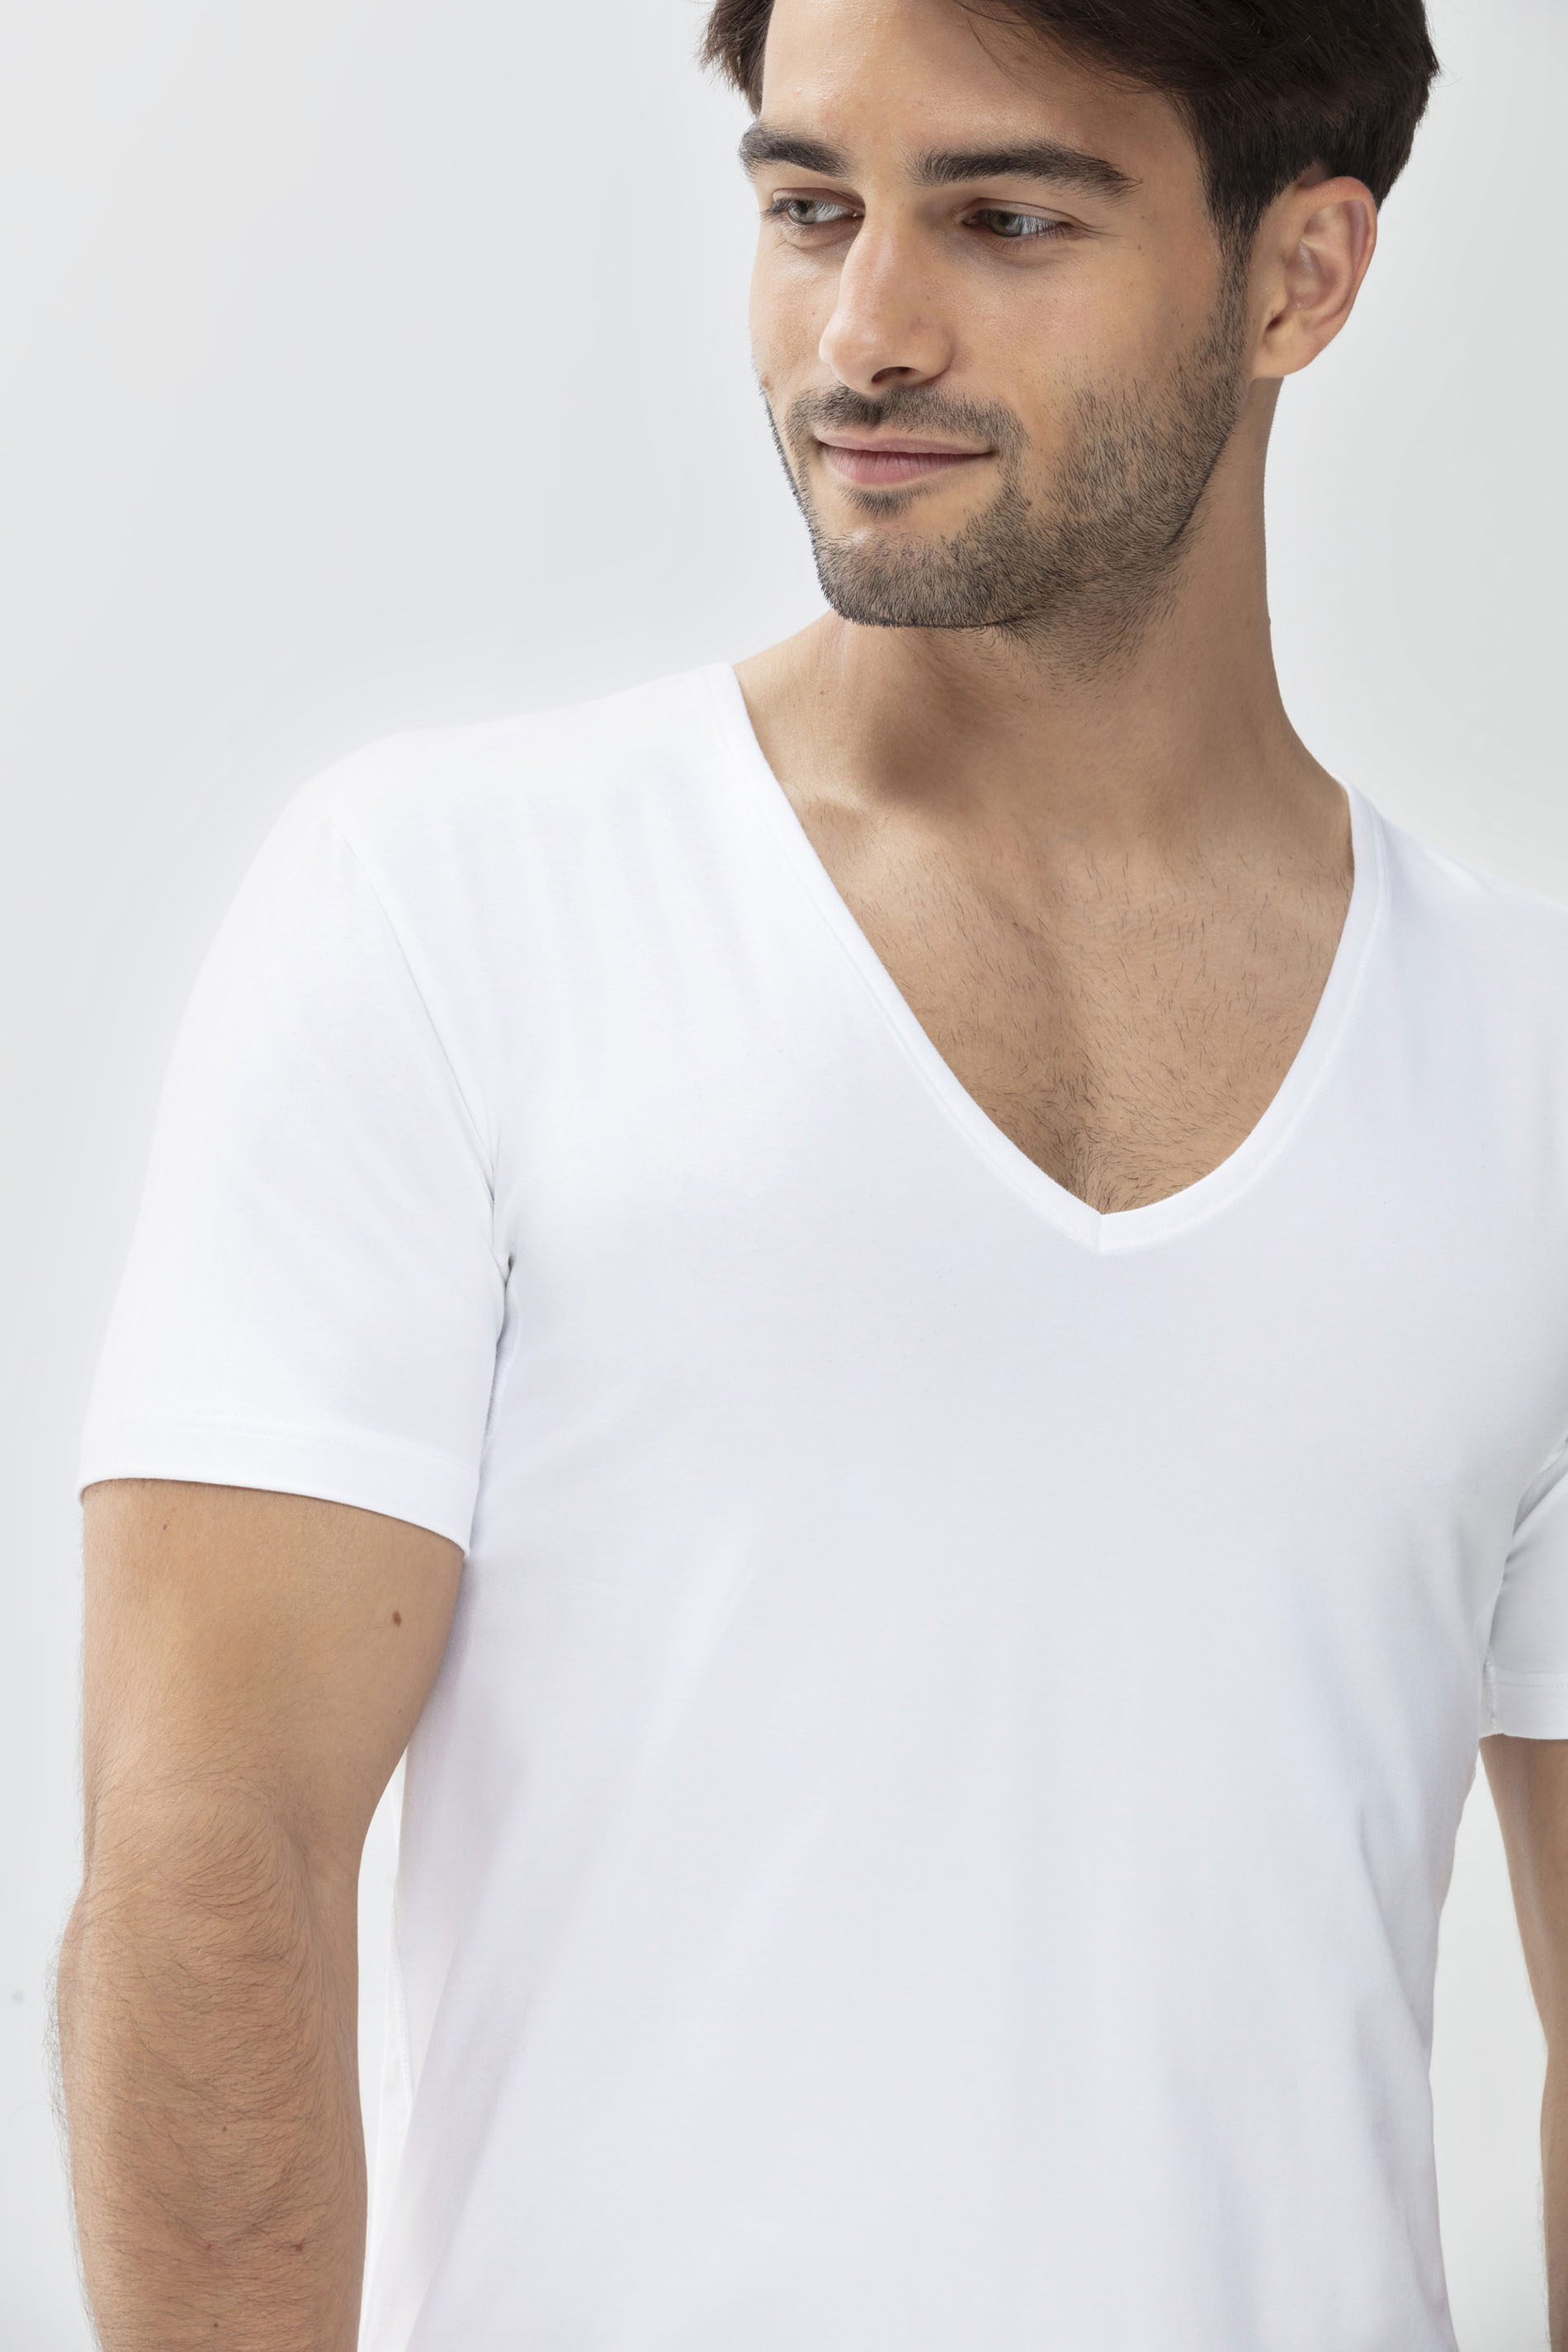 Das Drunterhemd - V-Neck White Serie Dry Cotton Functional  Front View | mey®